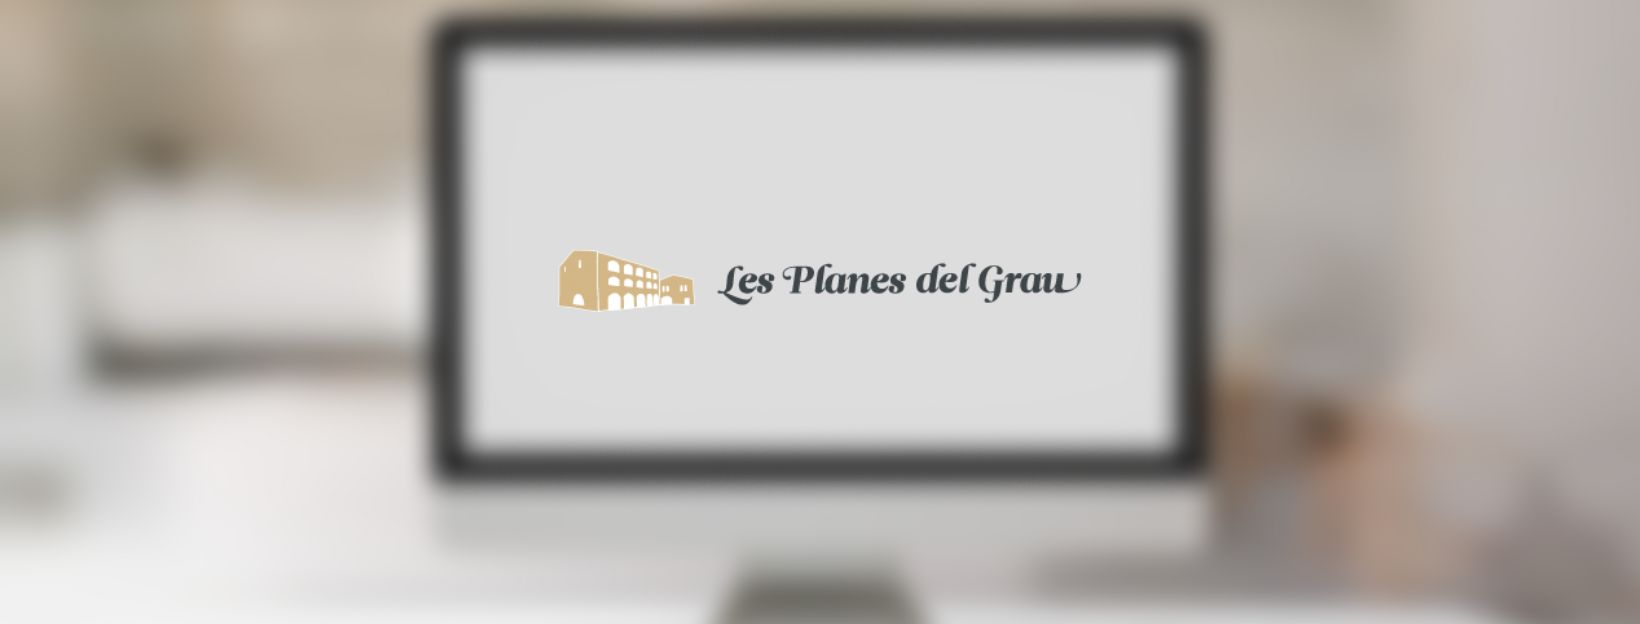 SEO for Les Planes del Grau’s e-commerce